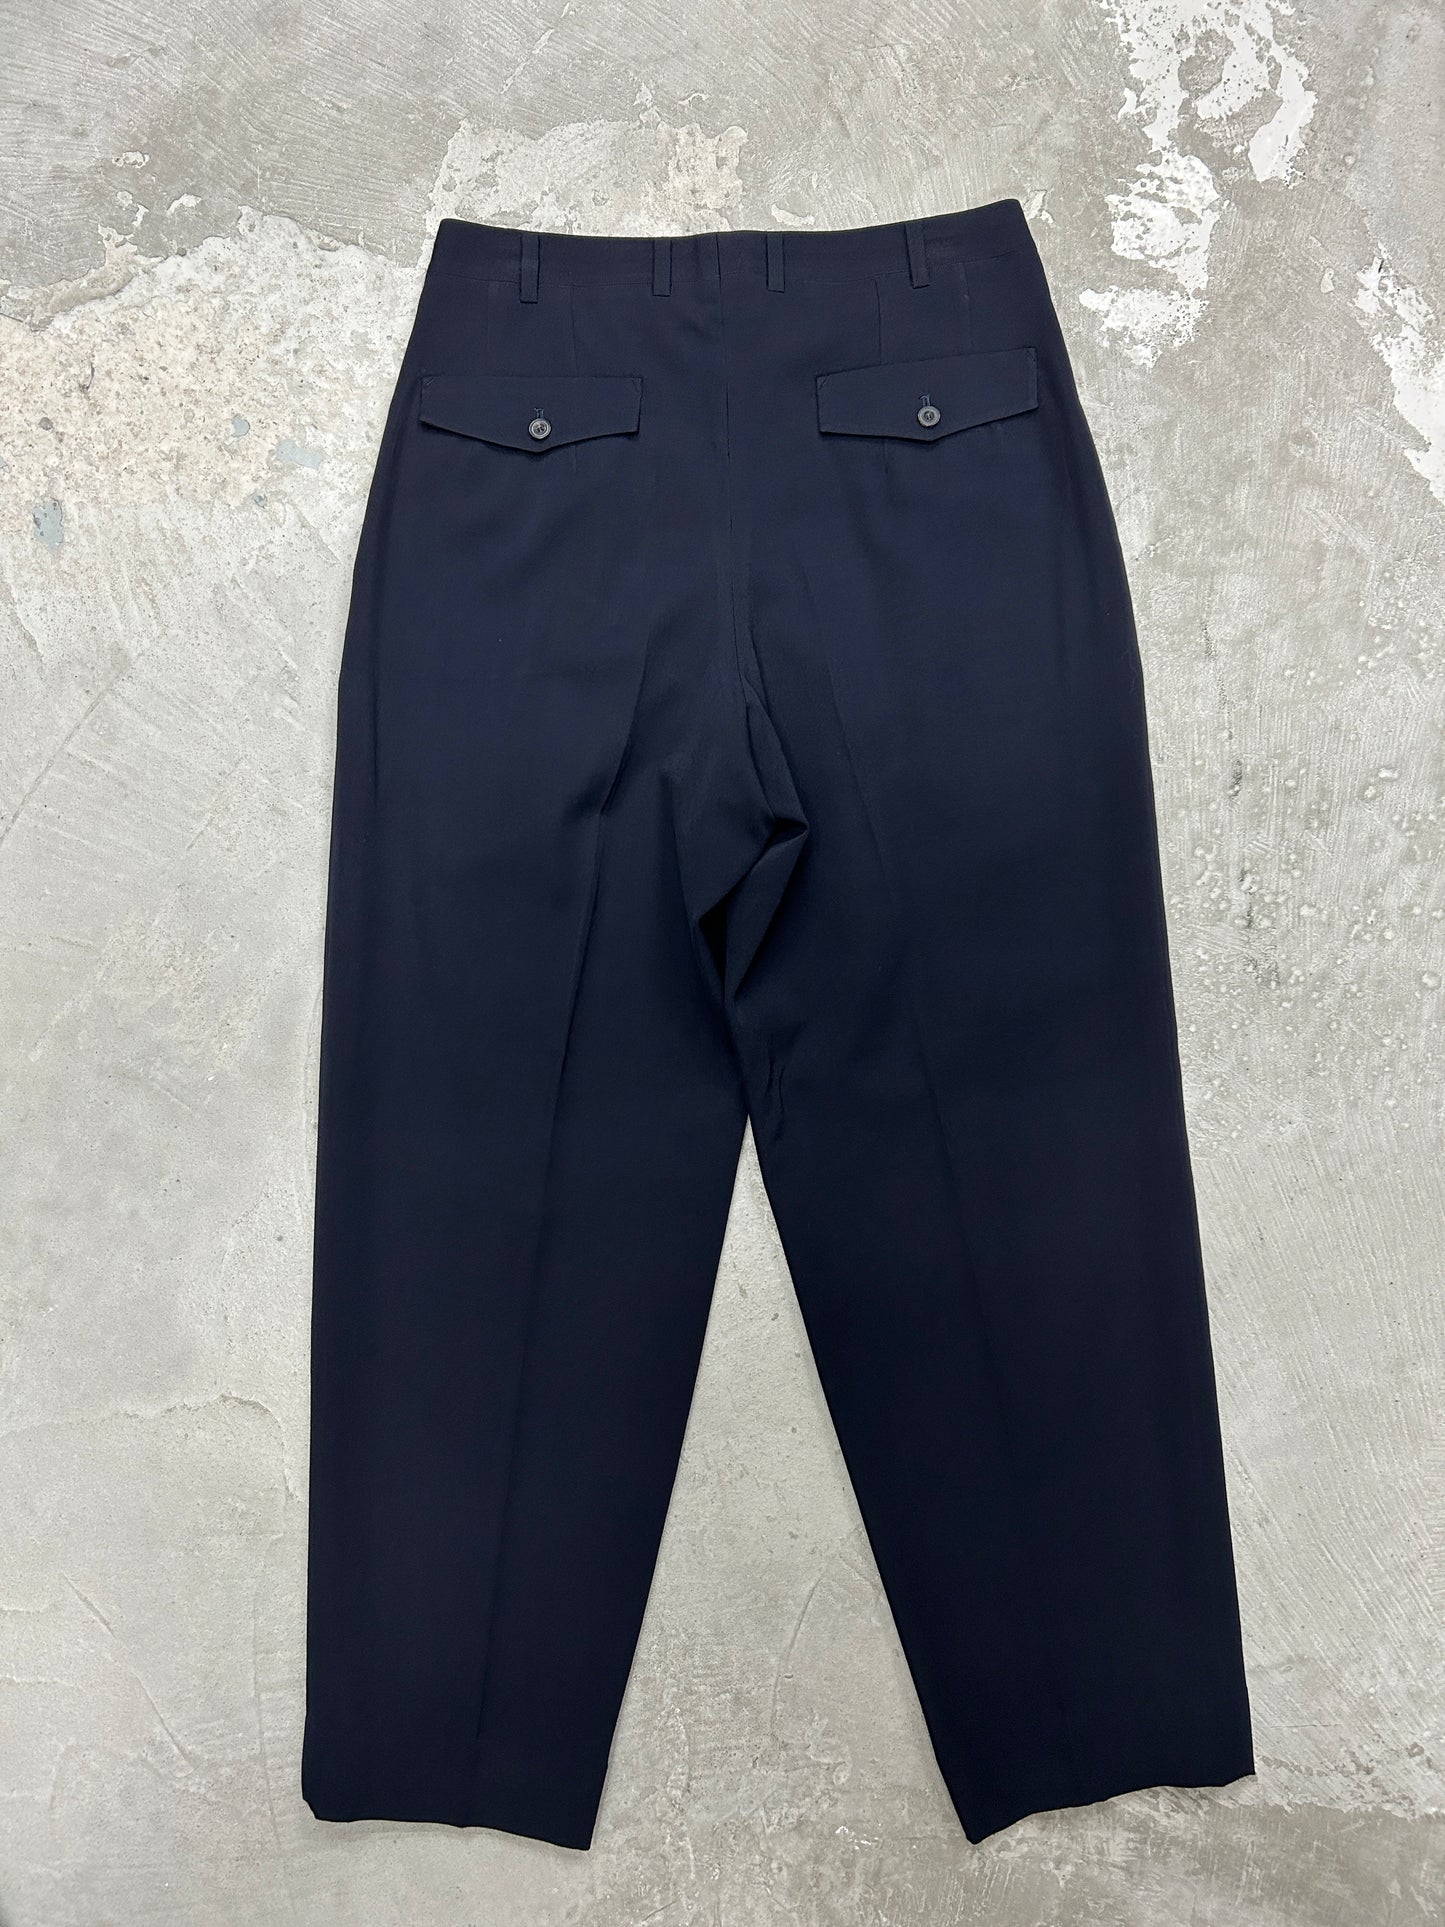 Yohji Yamamoto Costume D'homme AW1994 Trouser-Size M